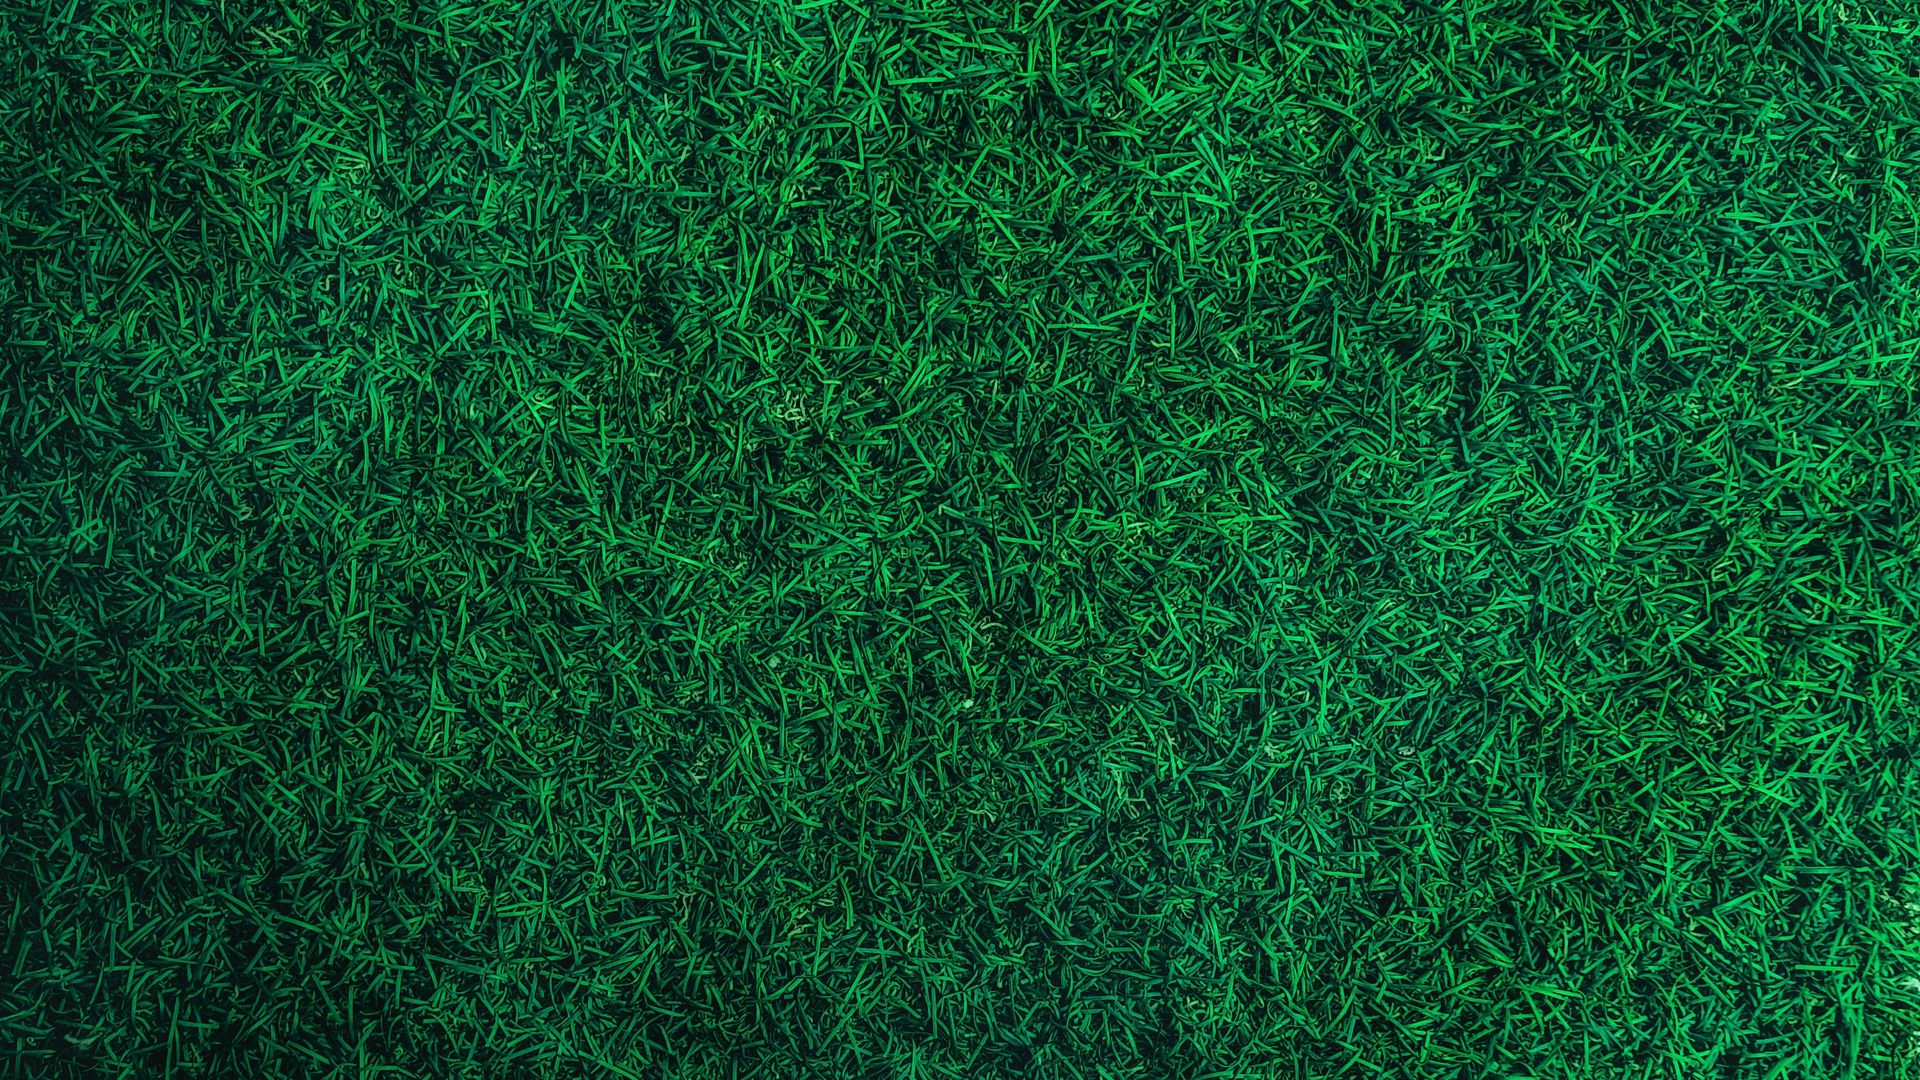 Скачать 1920x1080 трава, зеленый, газон, вид сверху обои, картинки full hd, hdtv, fhd, 1080p